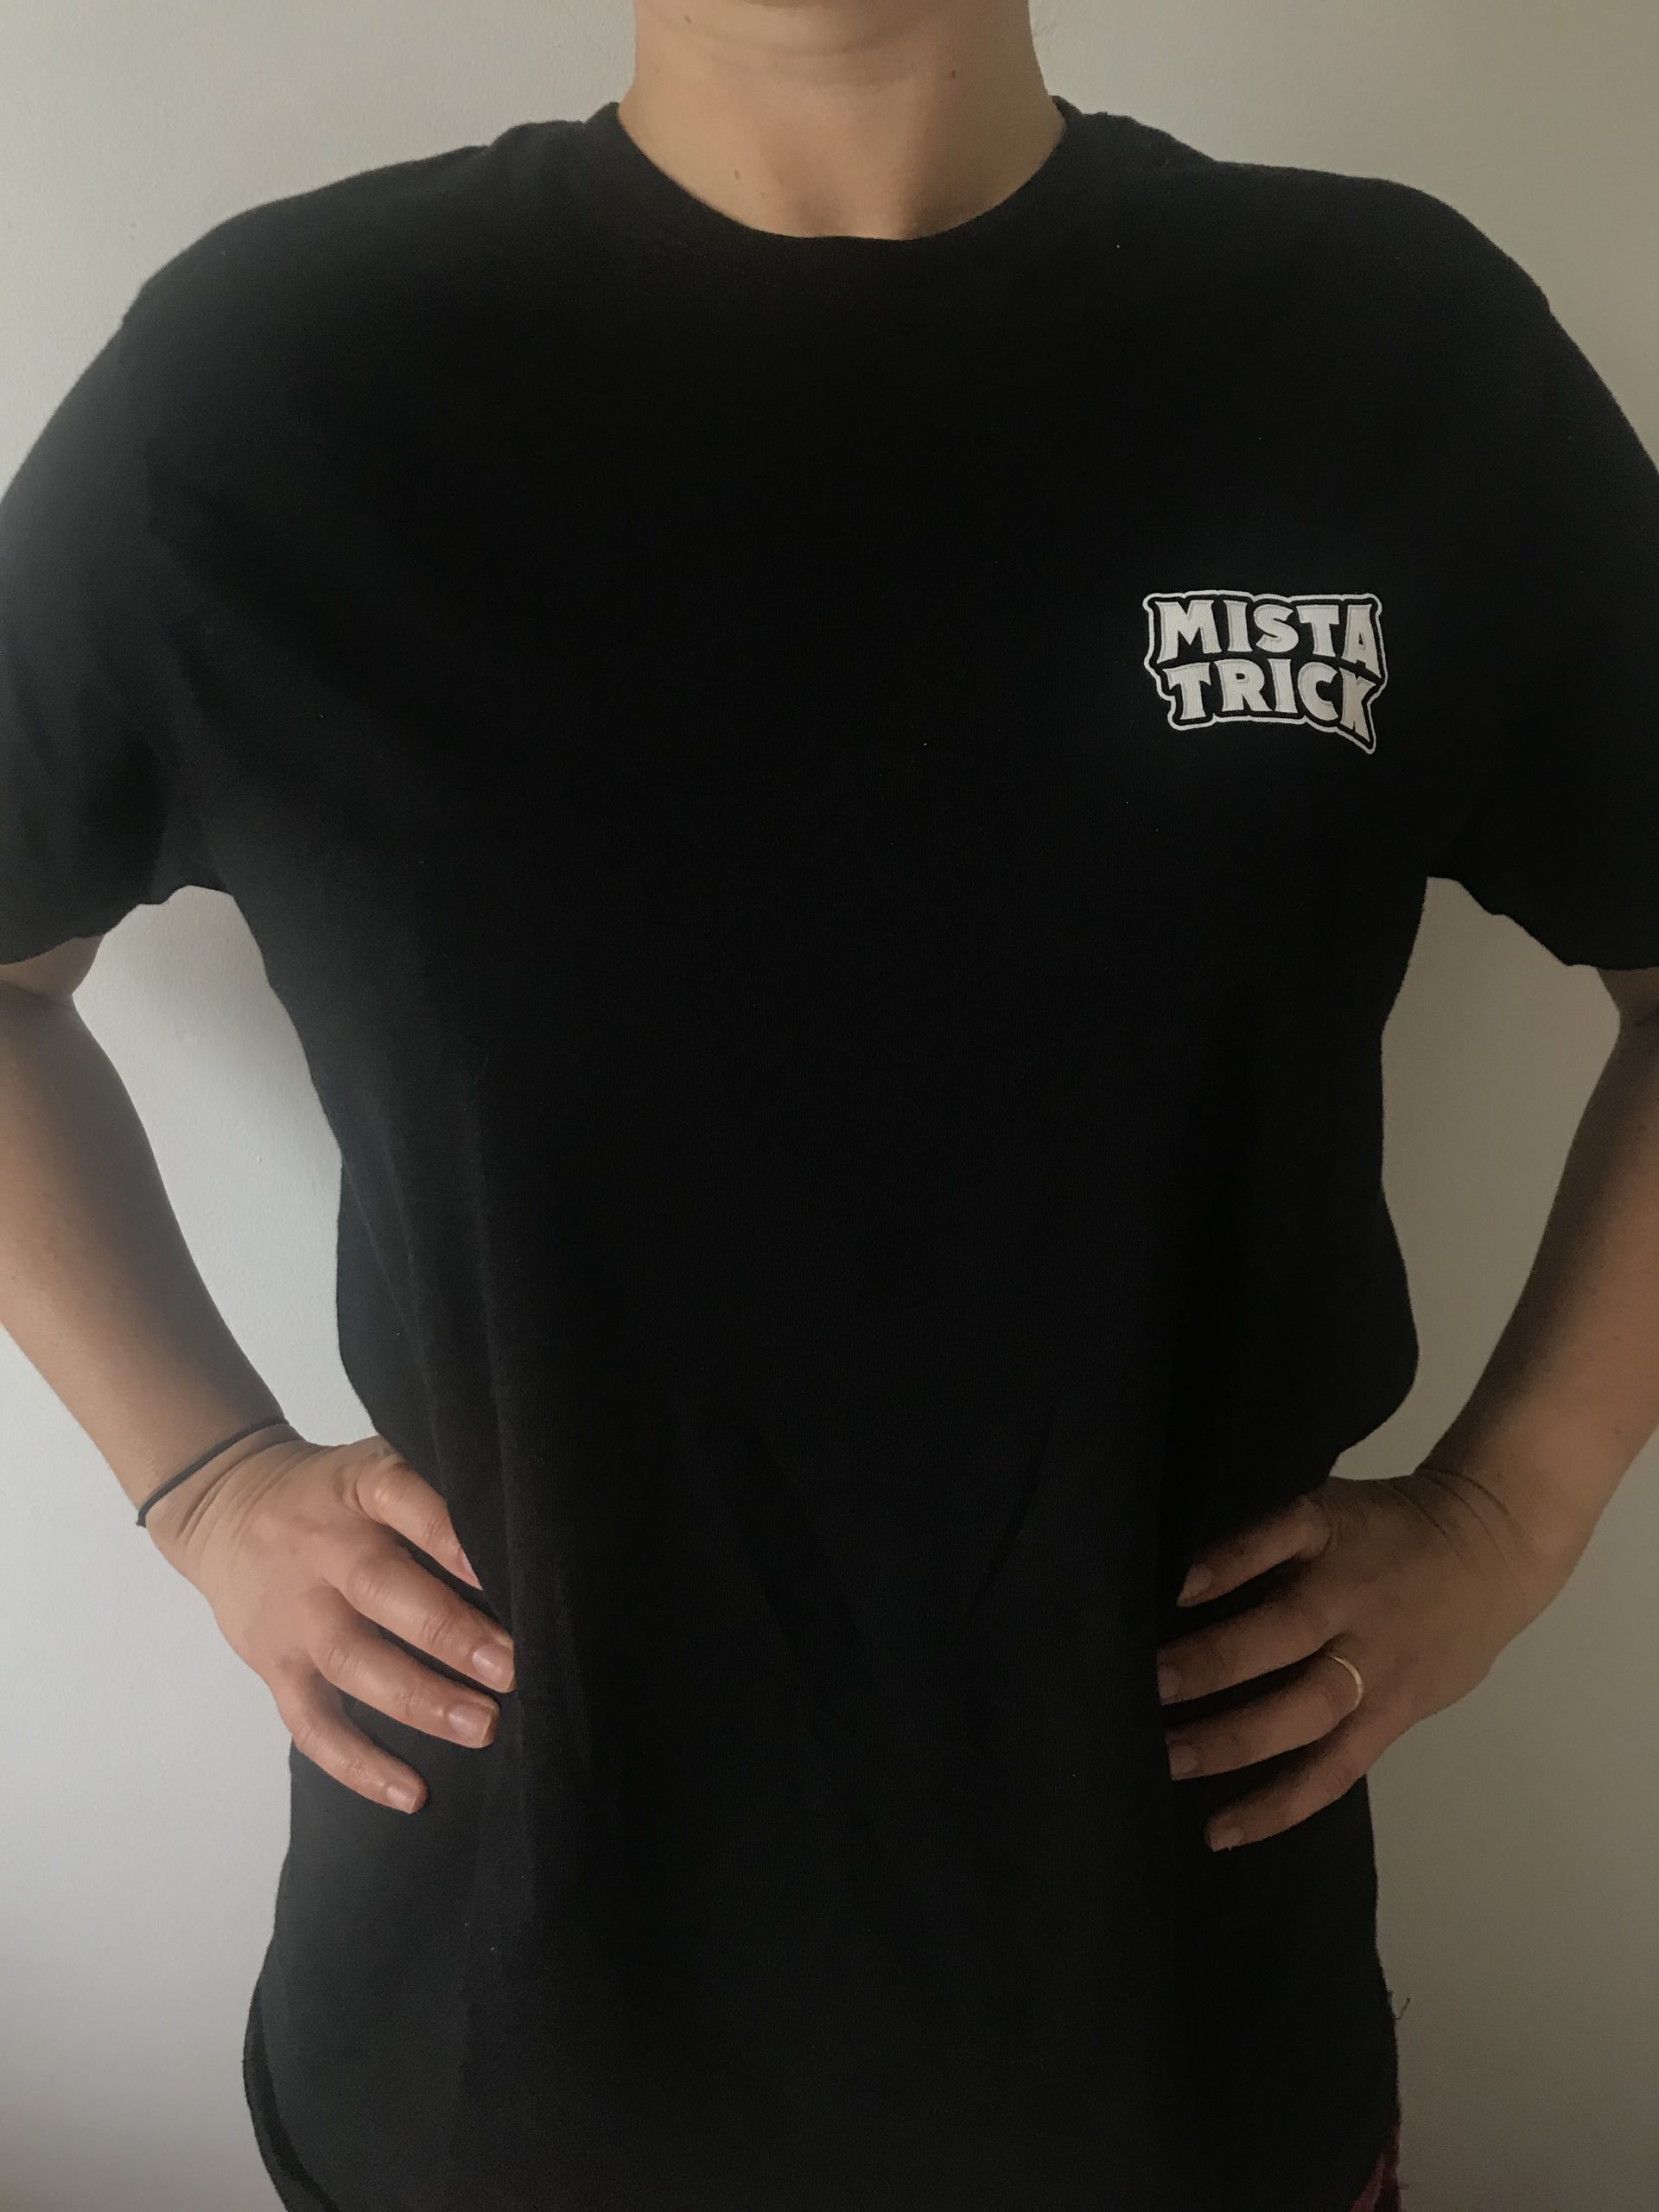 Mista Trick T-Shirt Size: XXL